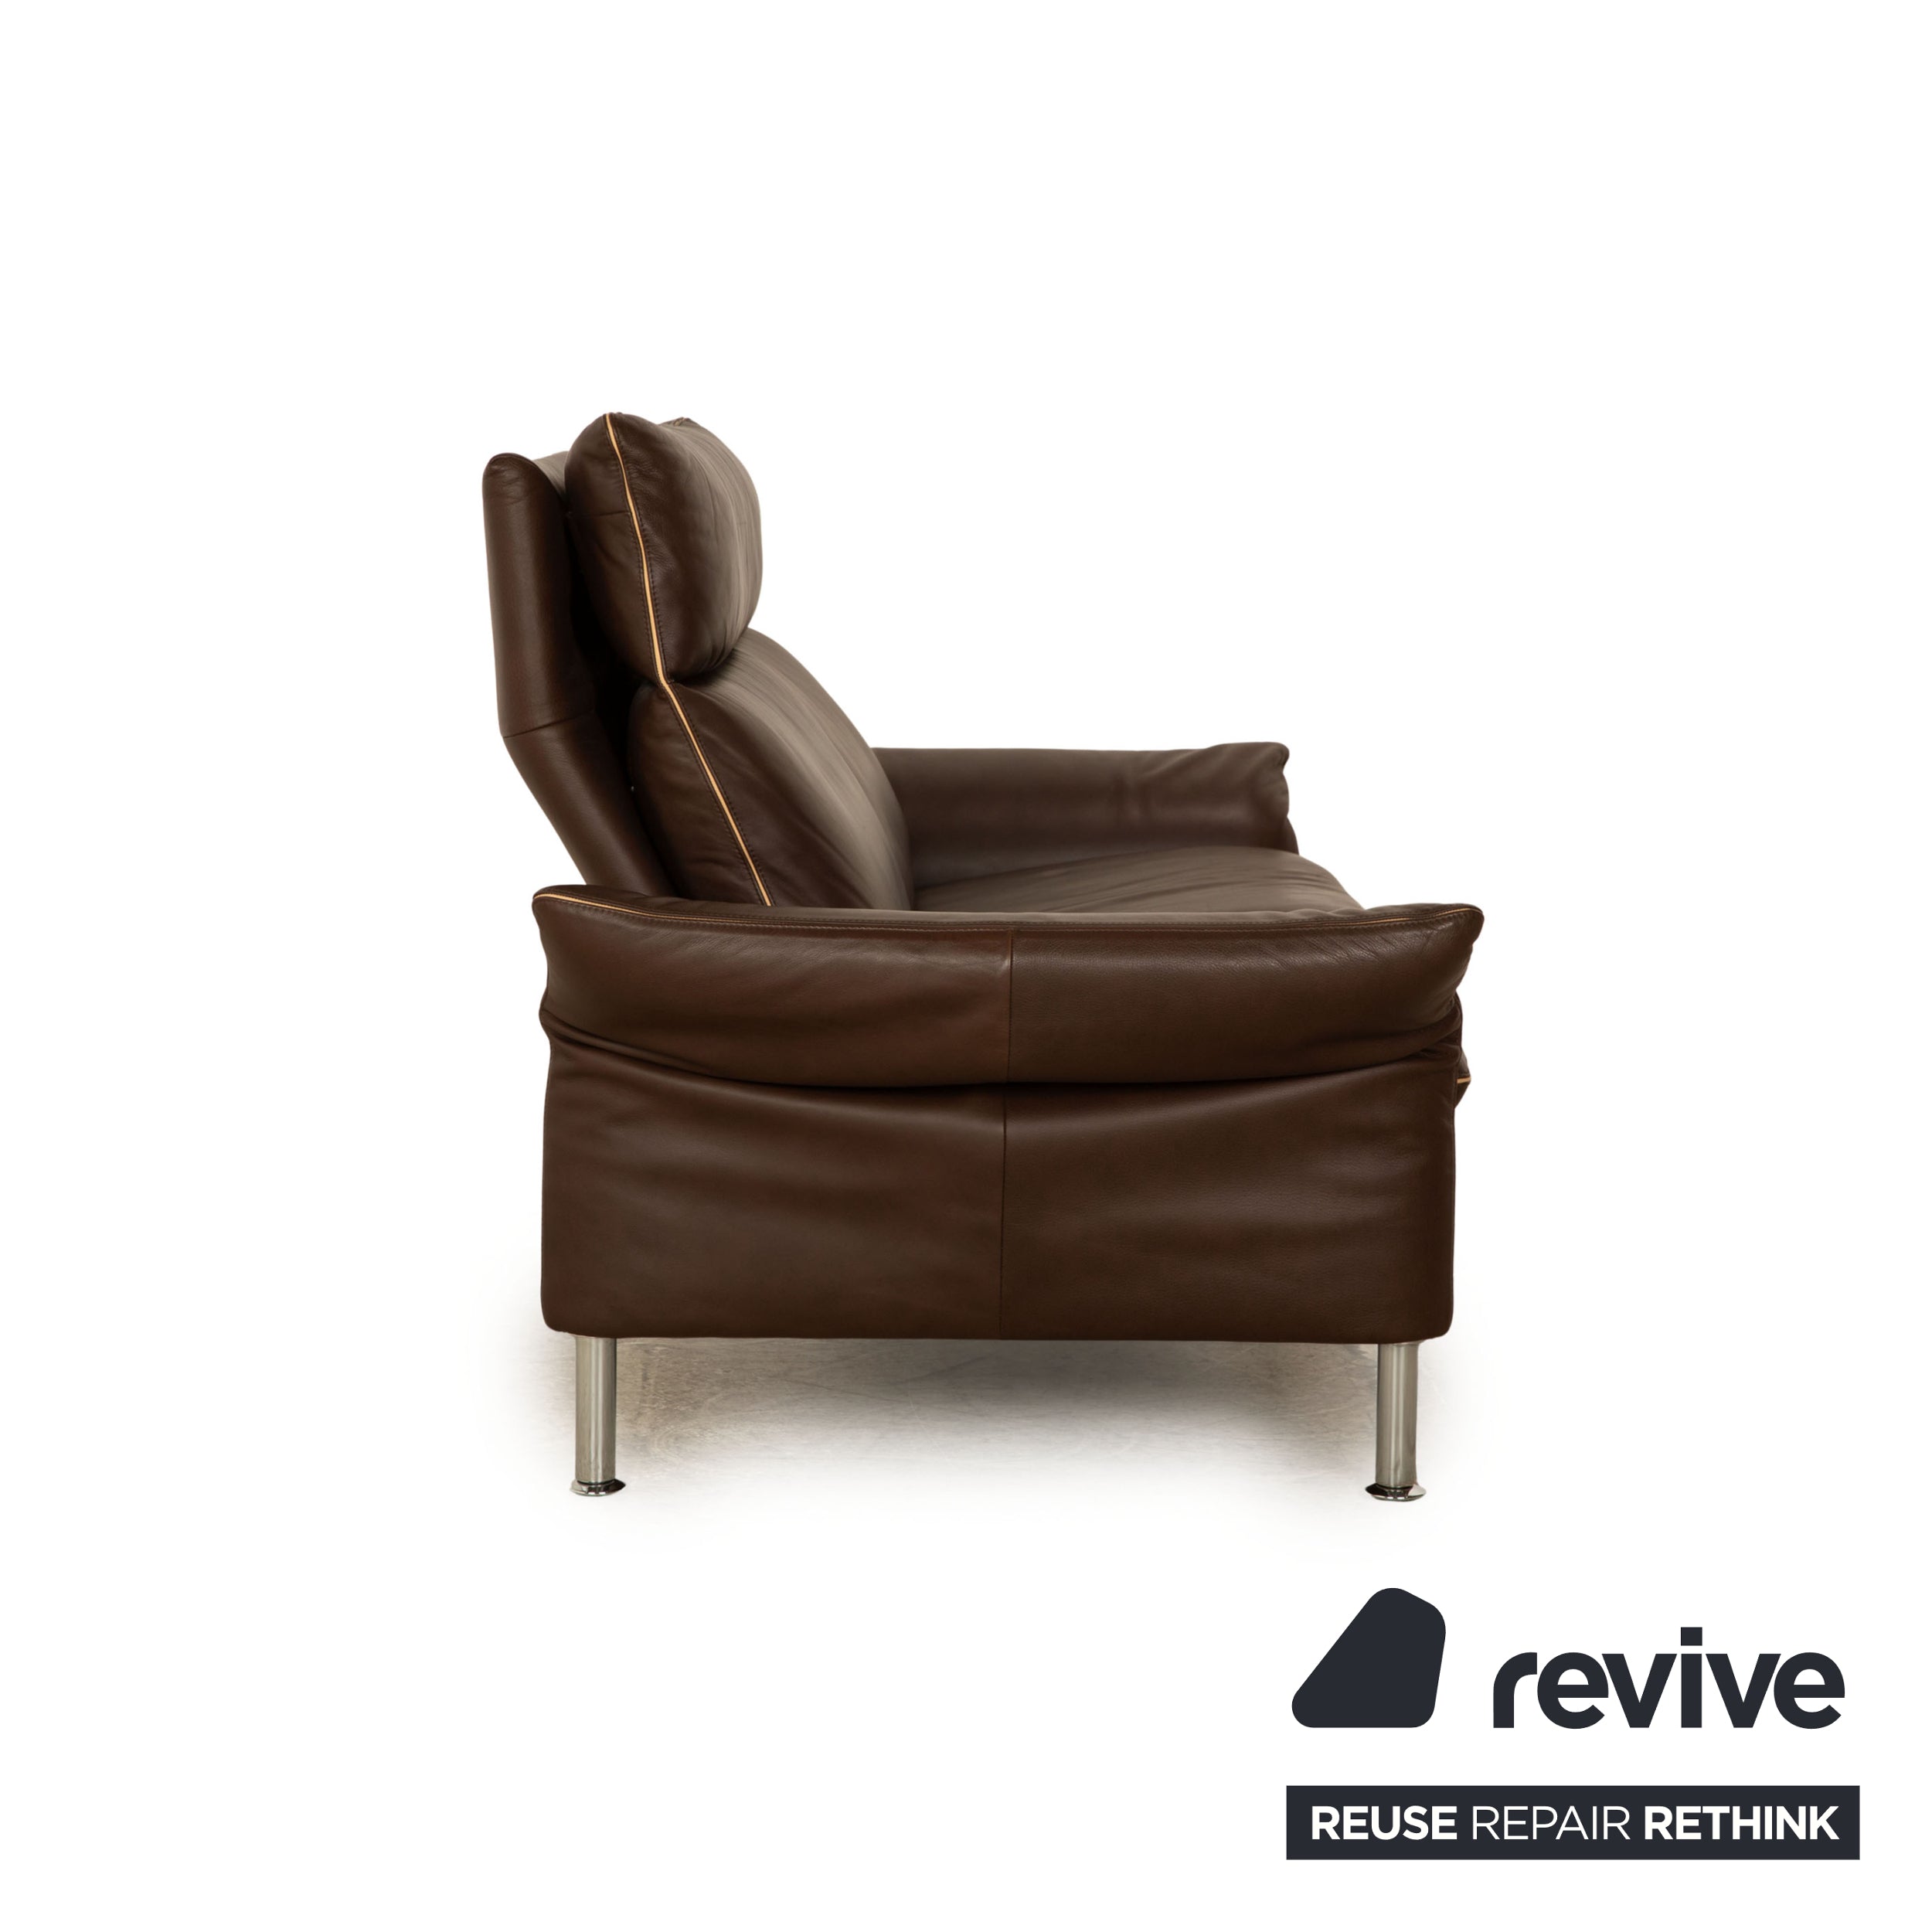 Erpo Porto Leather Two Seater Brown Dark Brown Sofa Couch